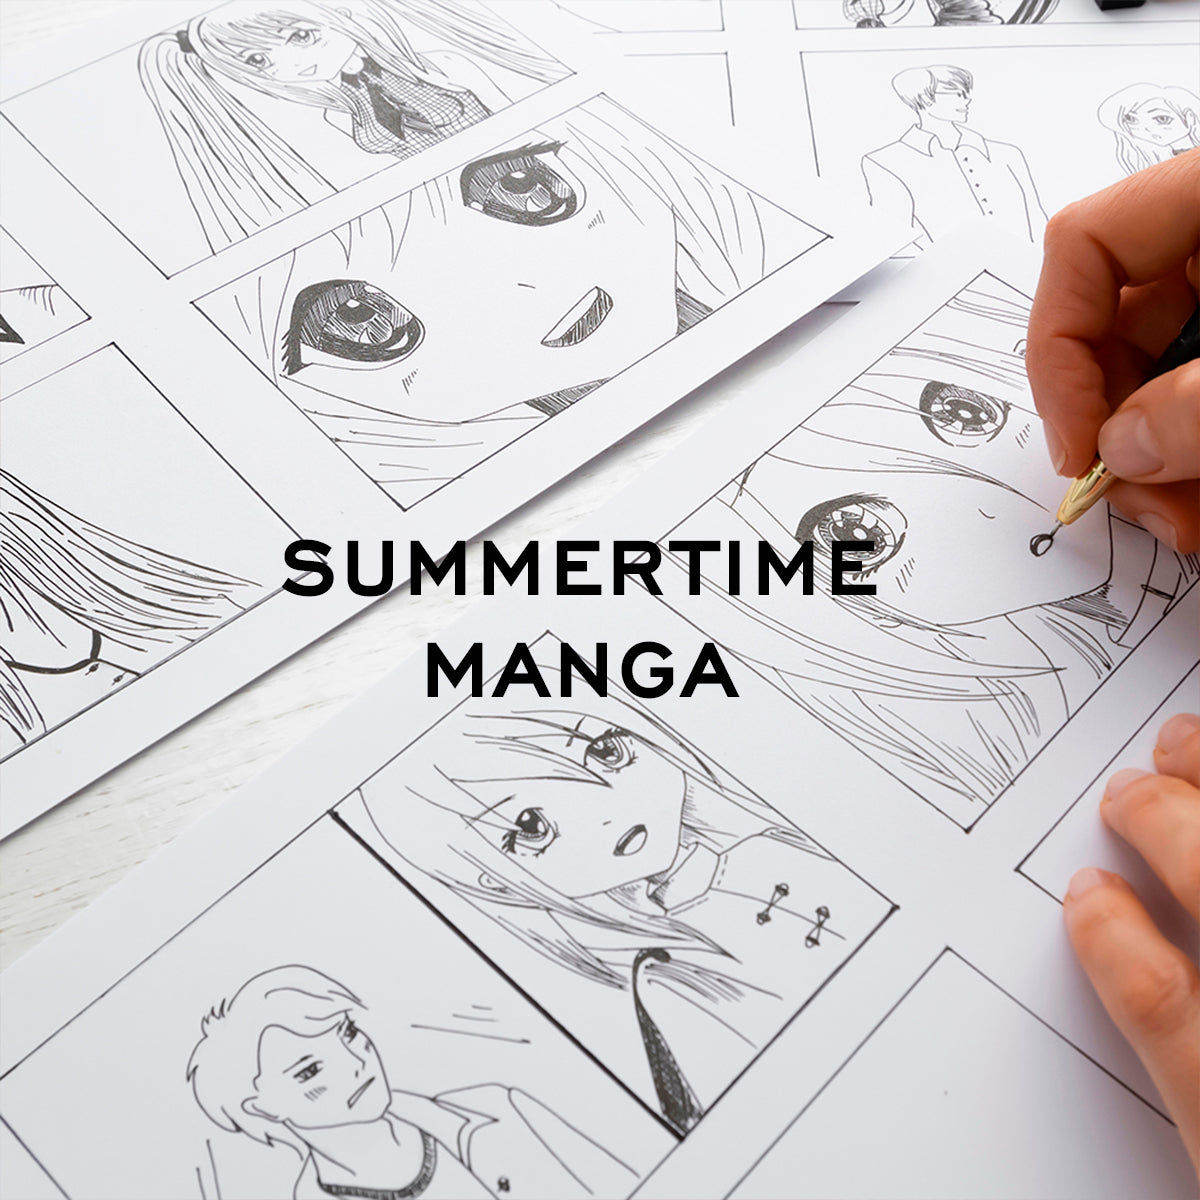 Summertime Manga